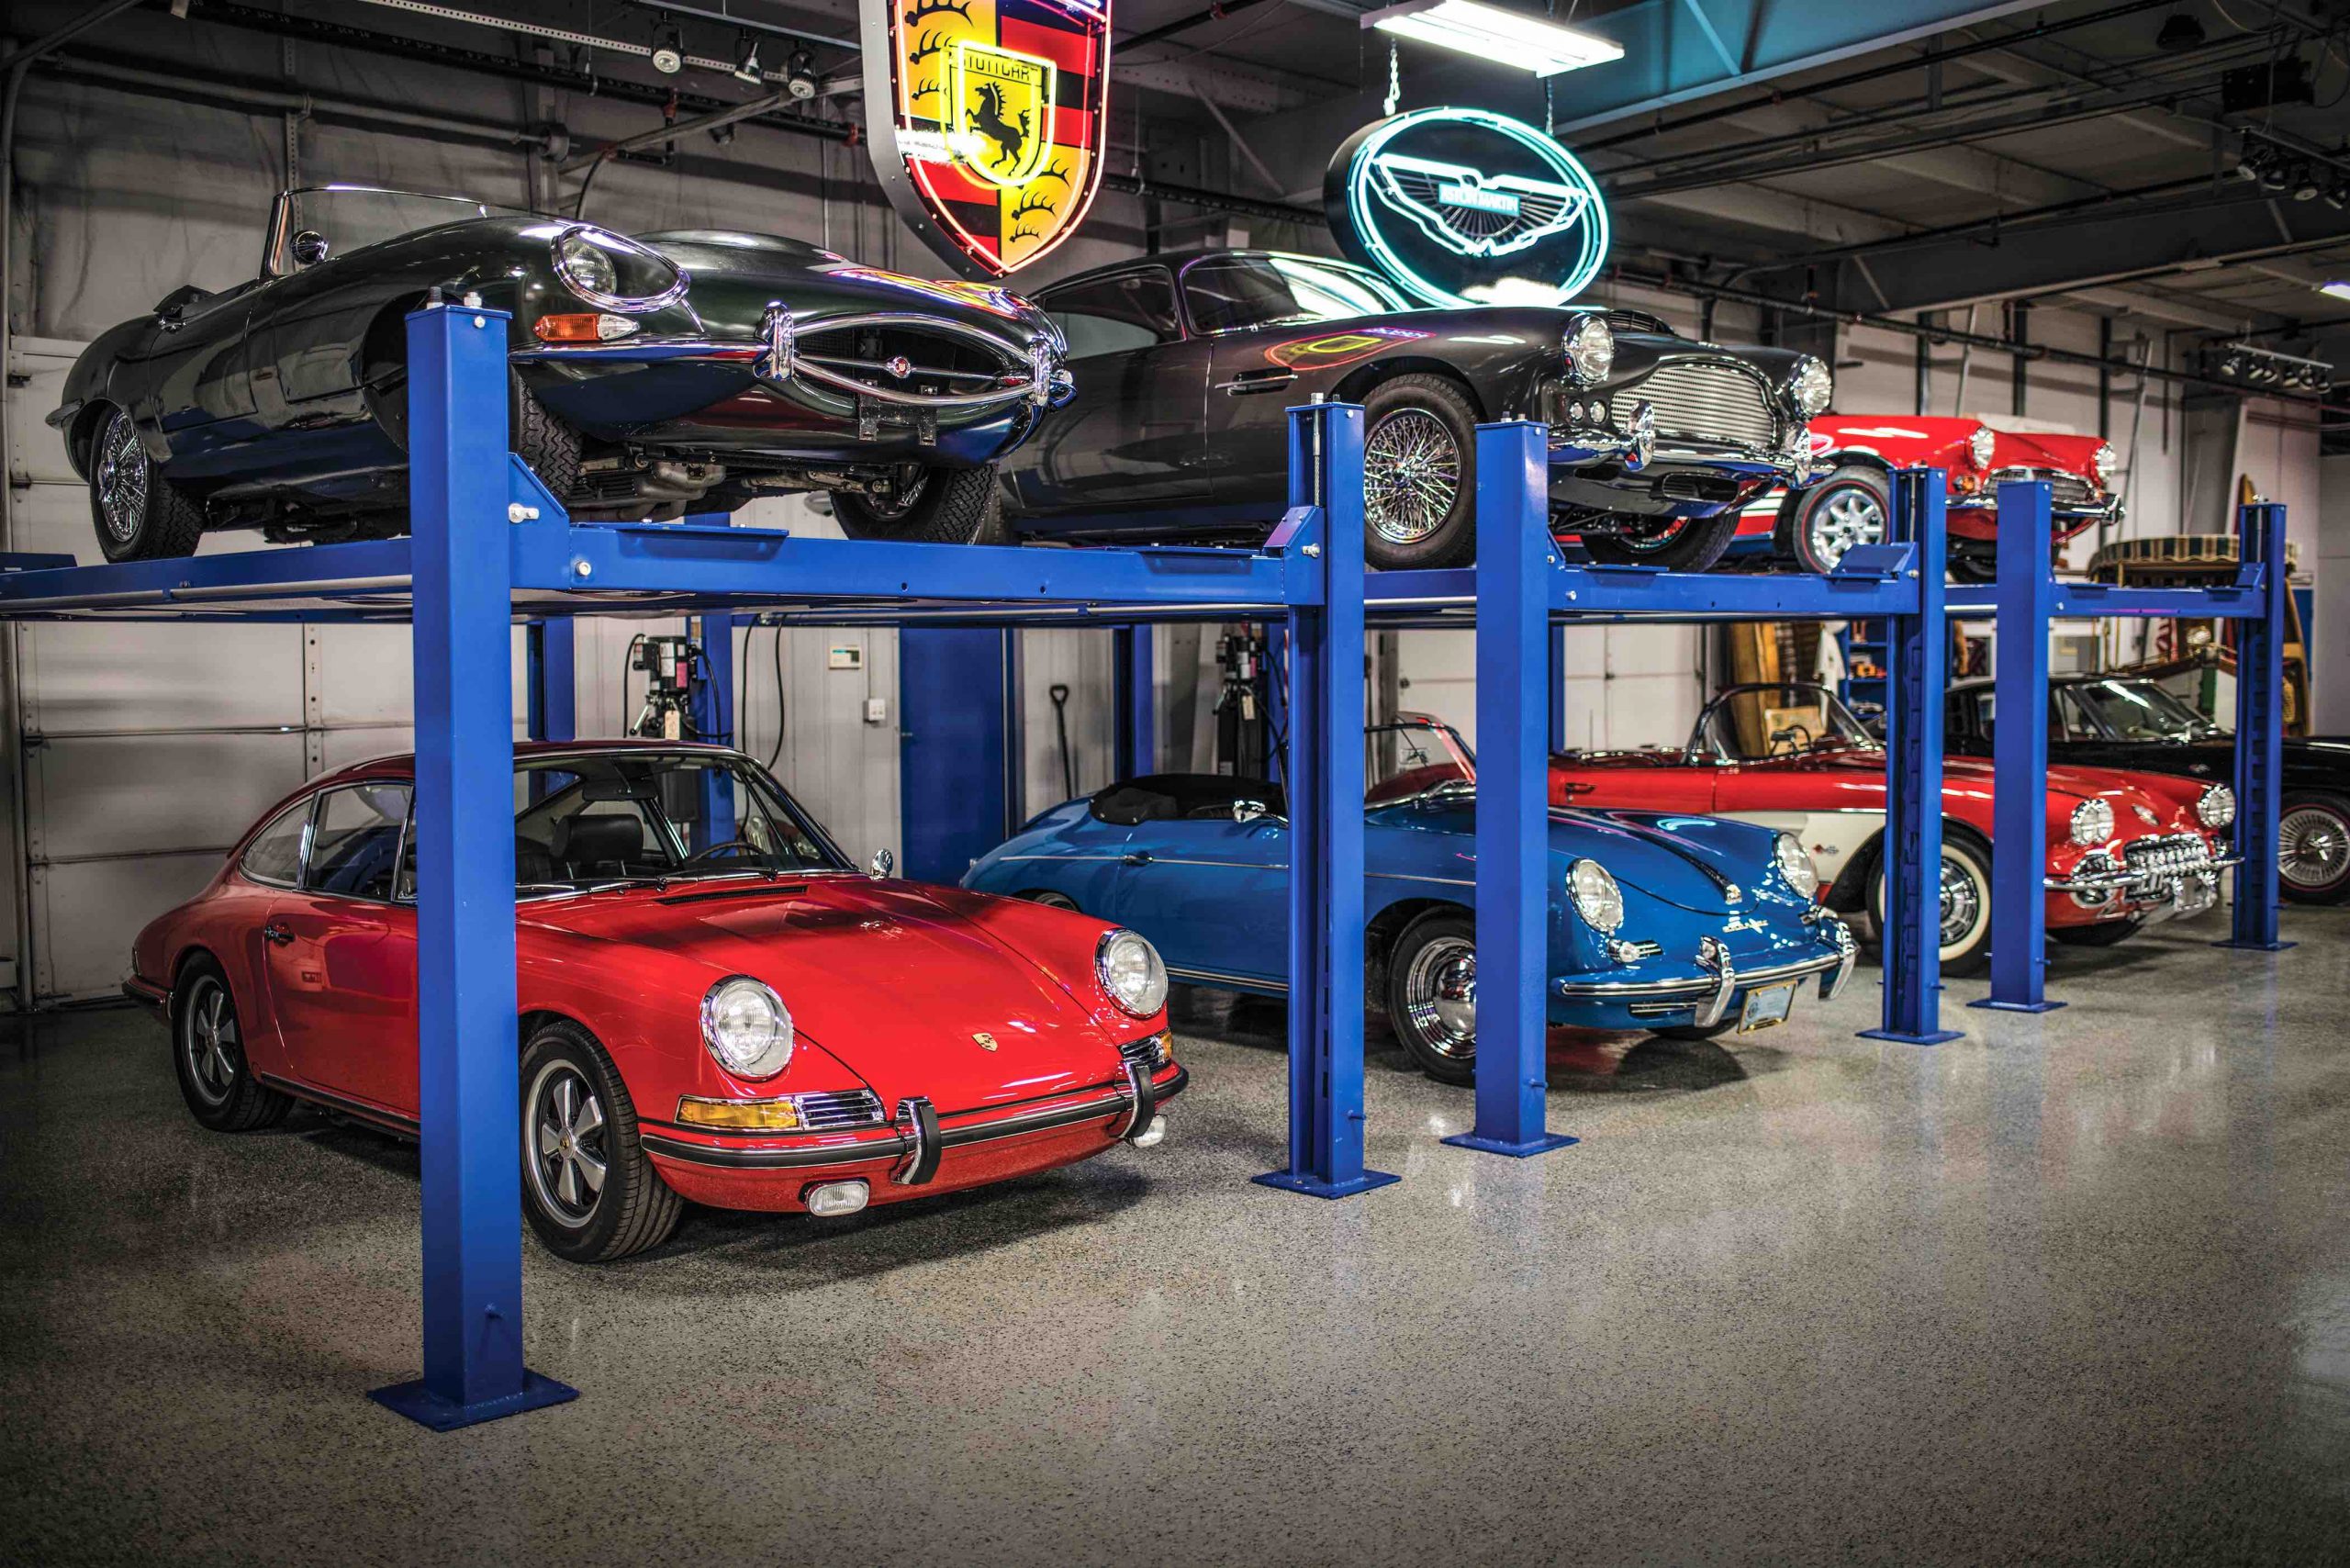 Classic cars inside a storage facility